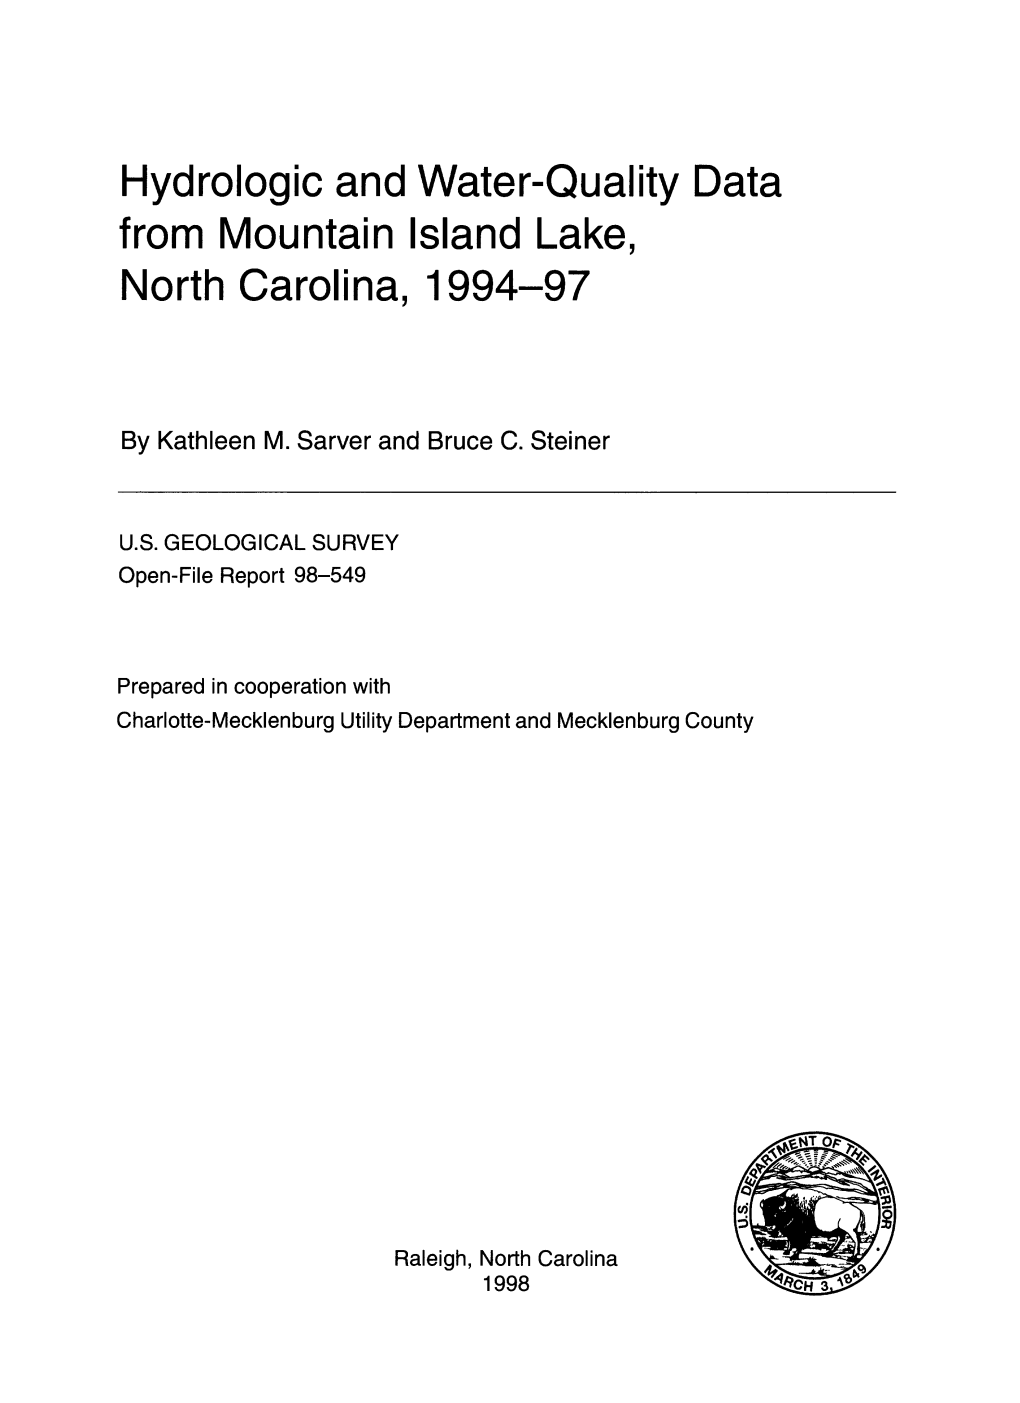 Hydrologic and Water-Quality Data from Mountain Island Lake, North Carolina, 1994-97